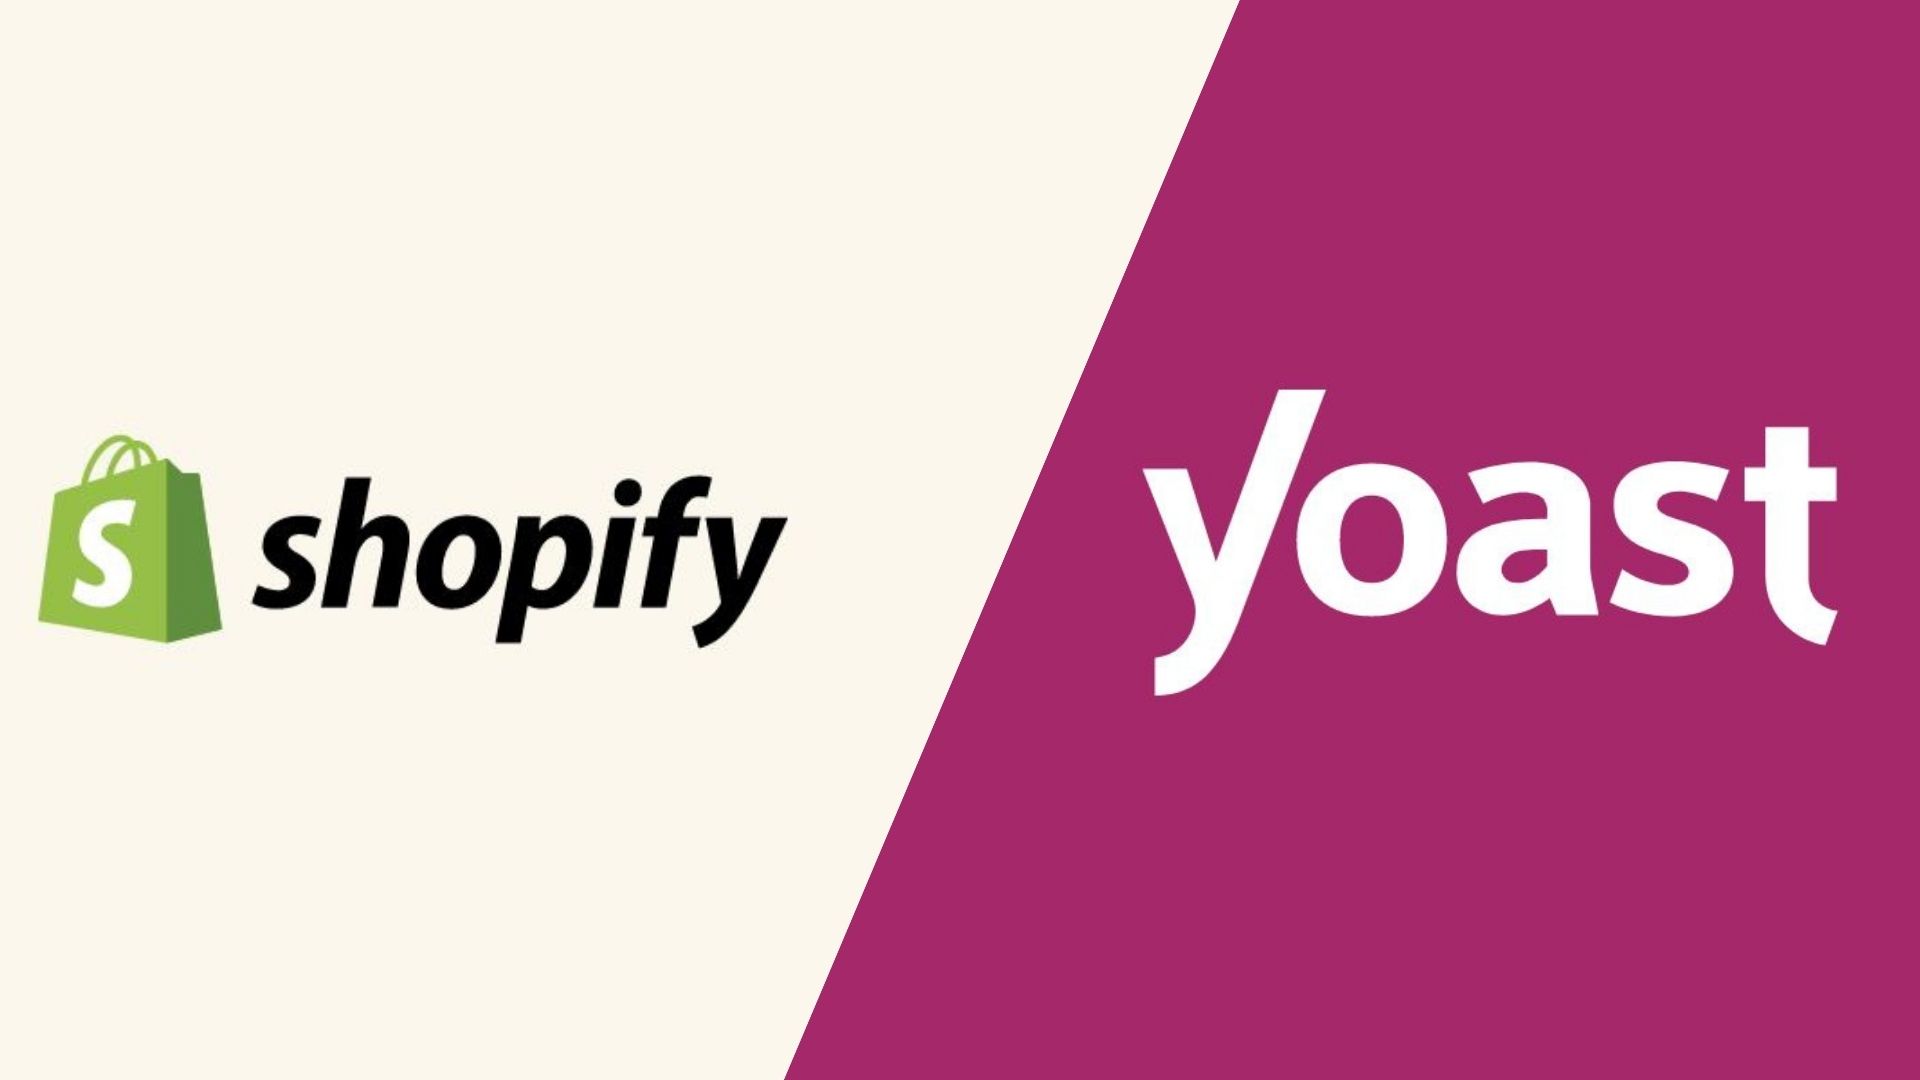 Yoast SEO Shopify app